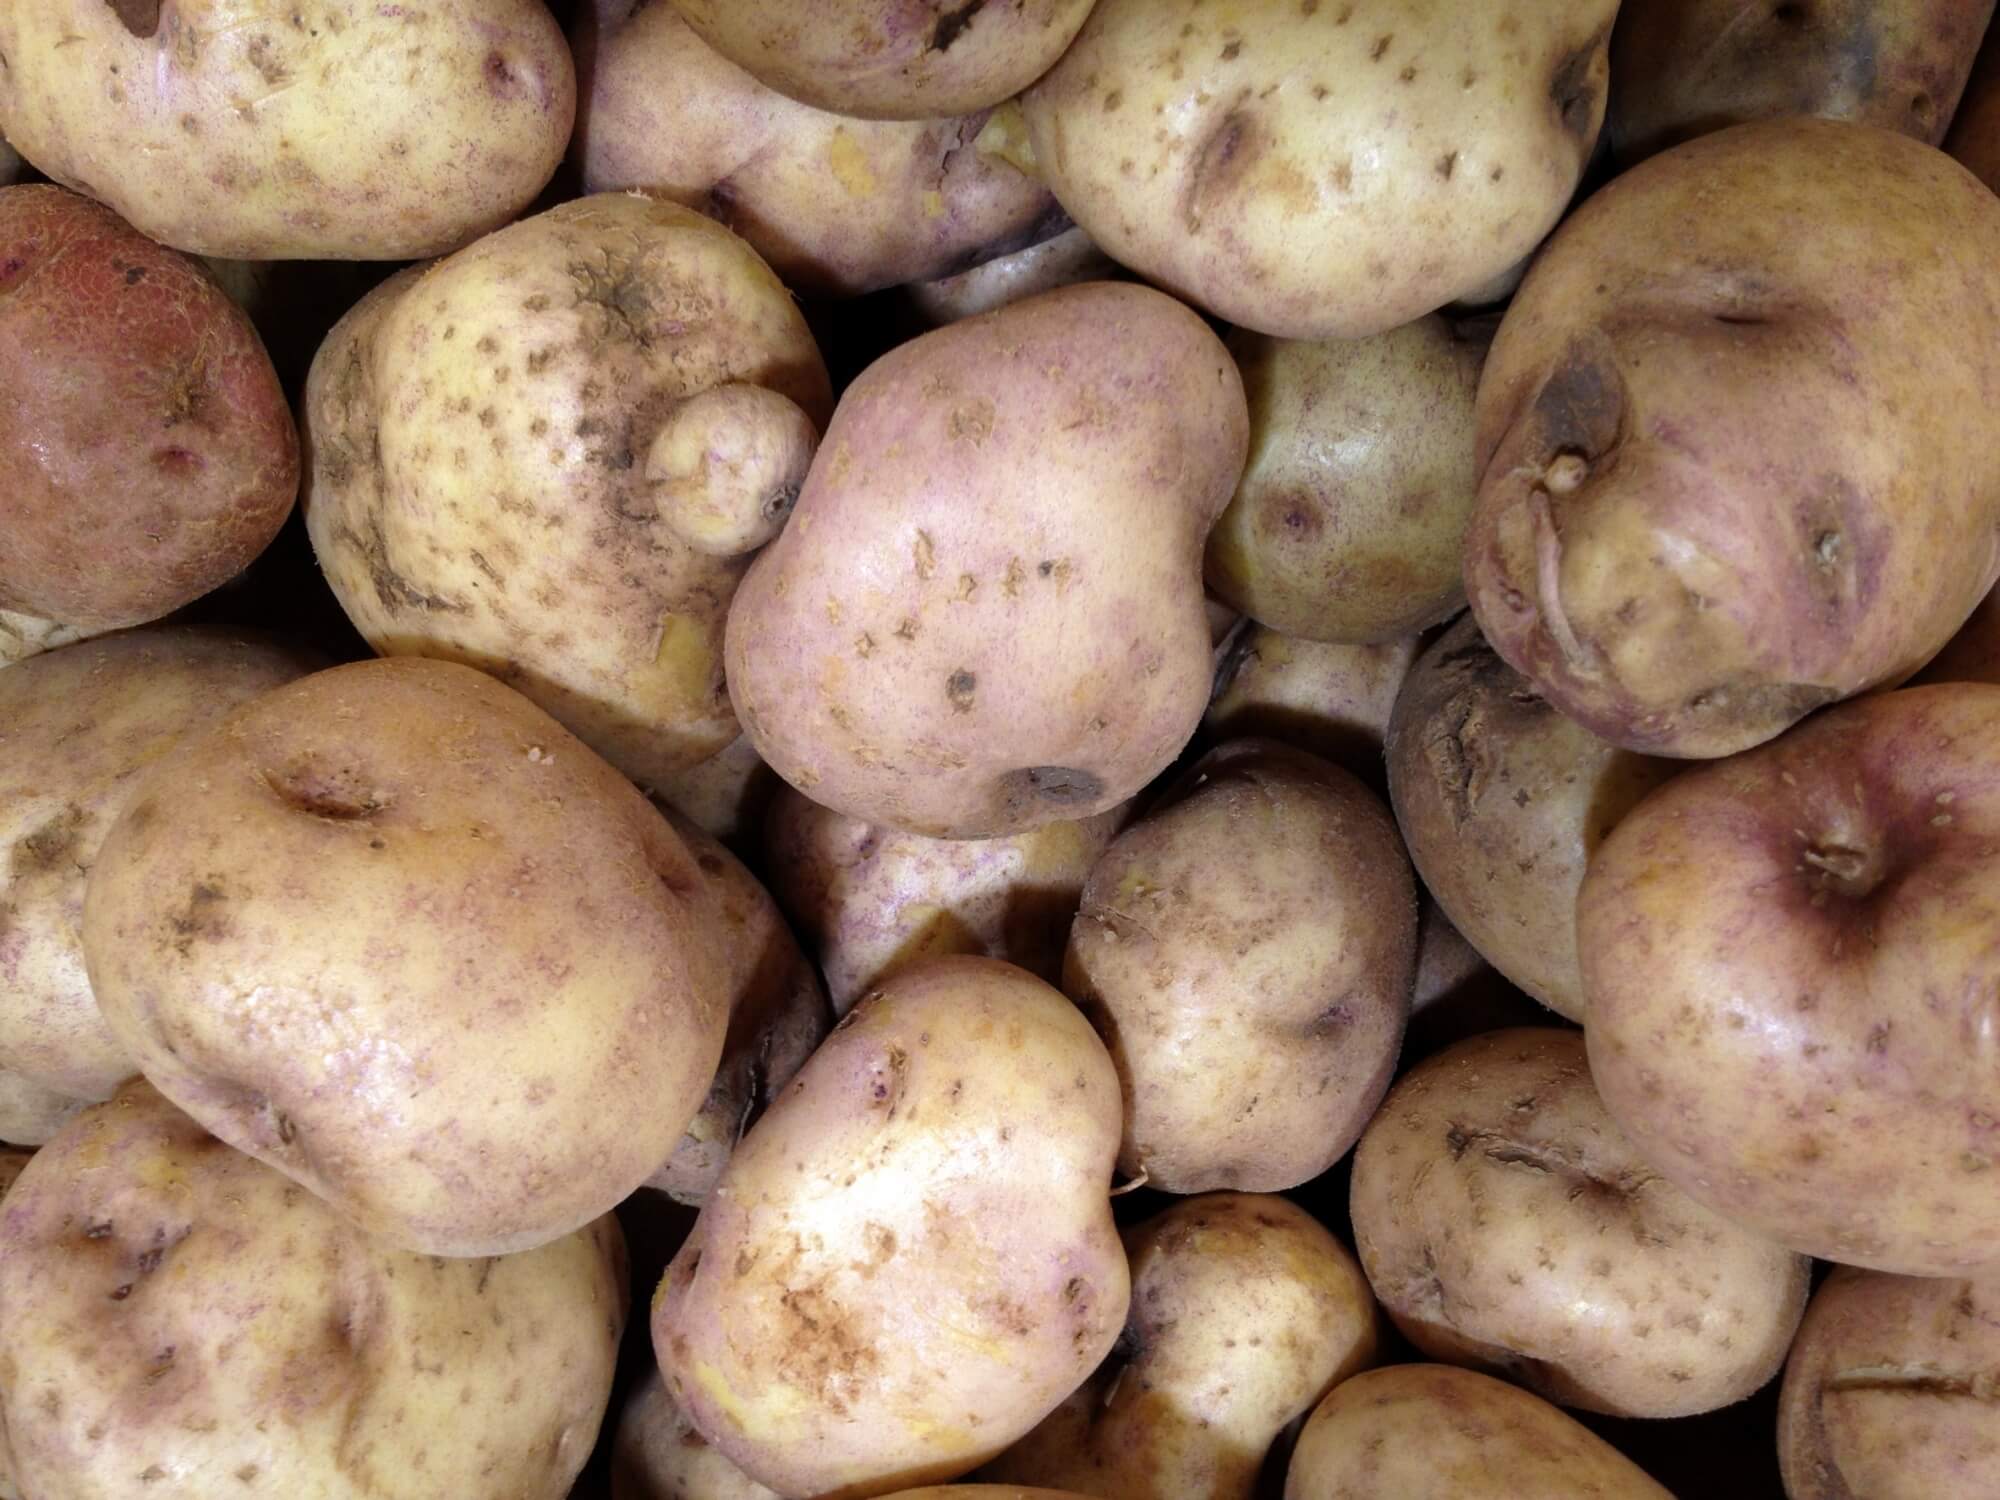 Some potatoes.